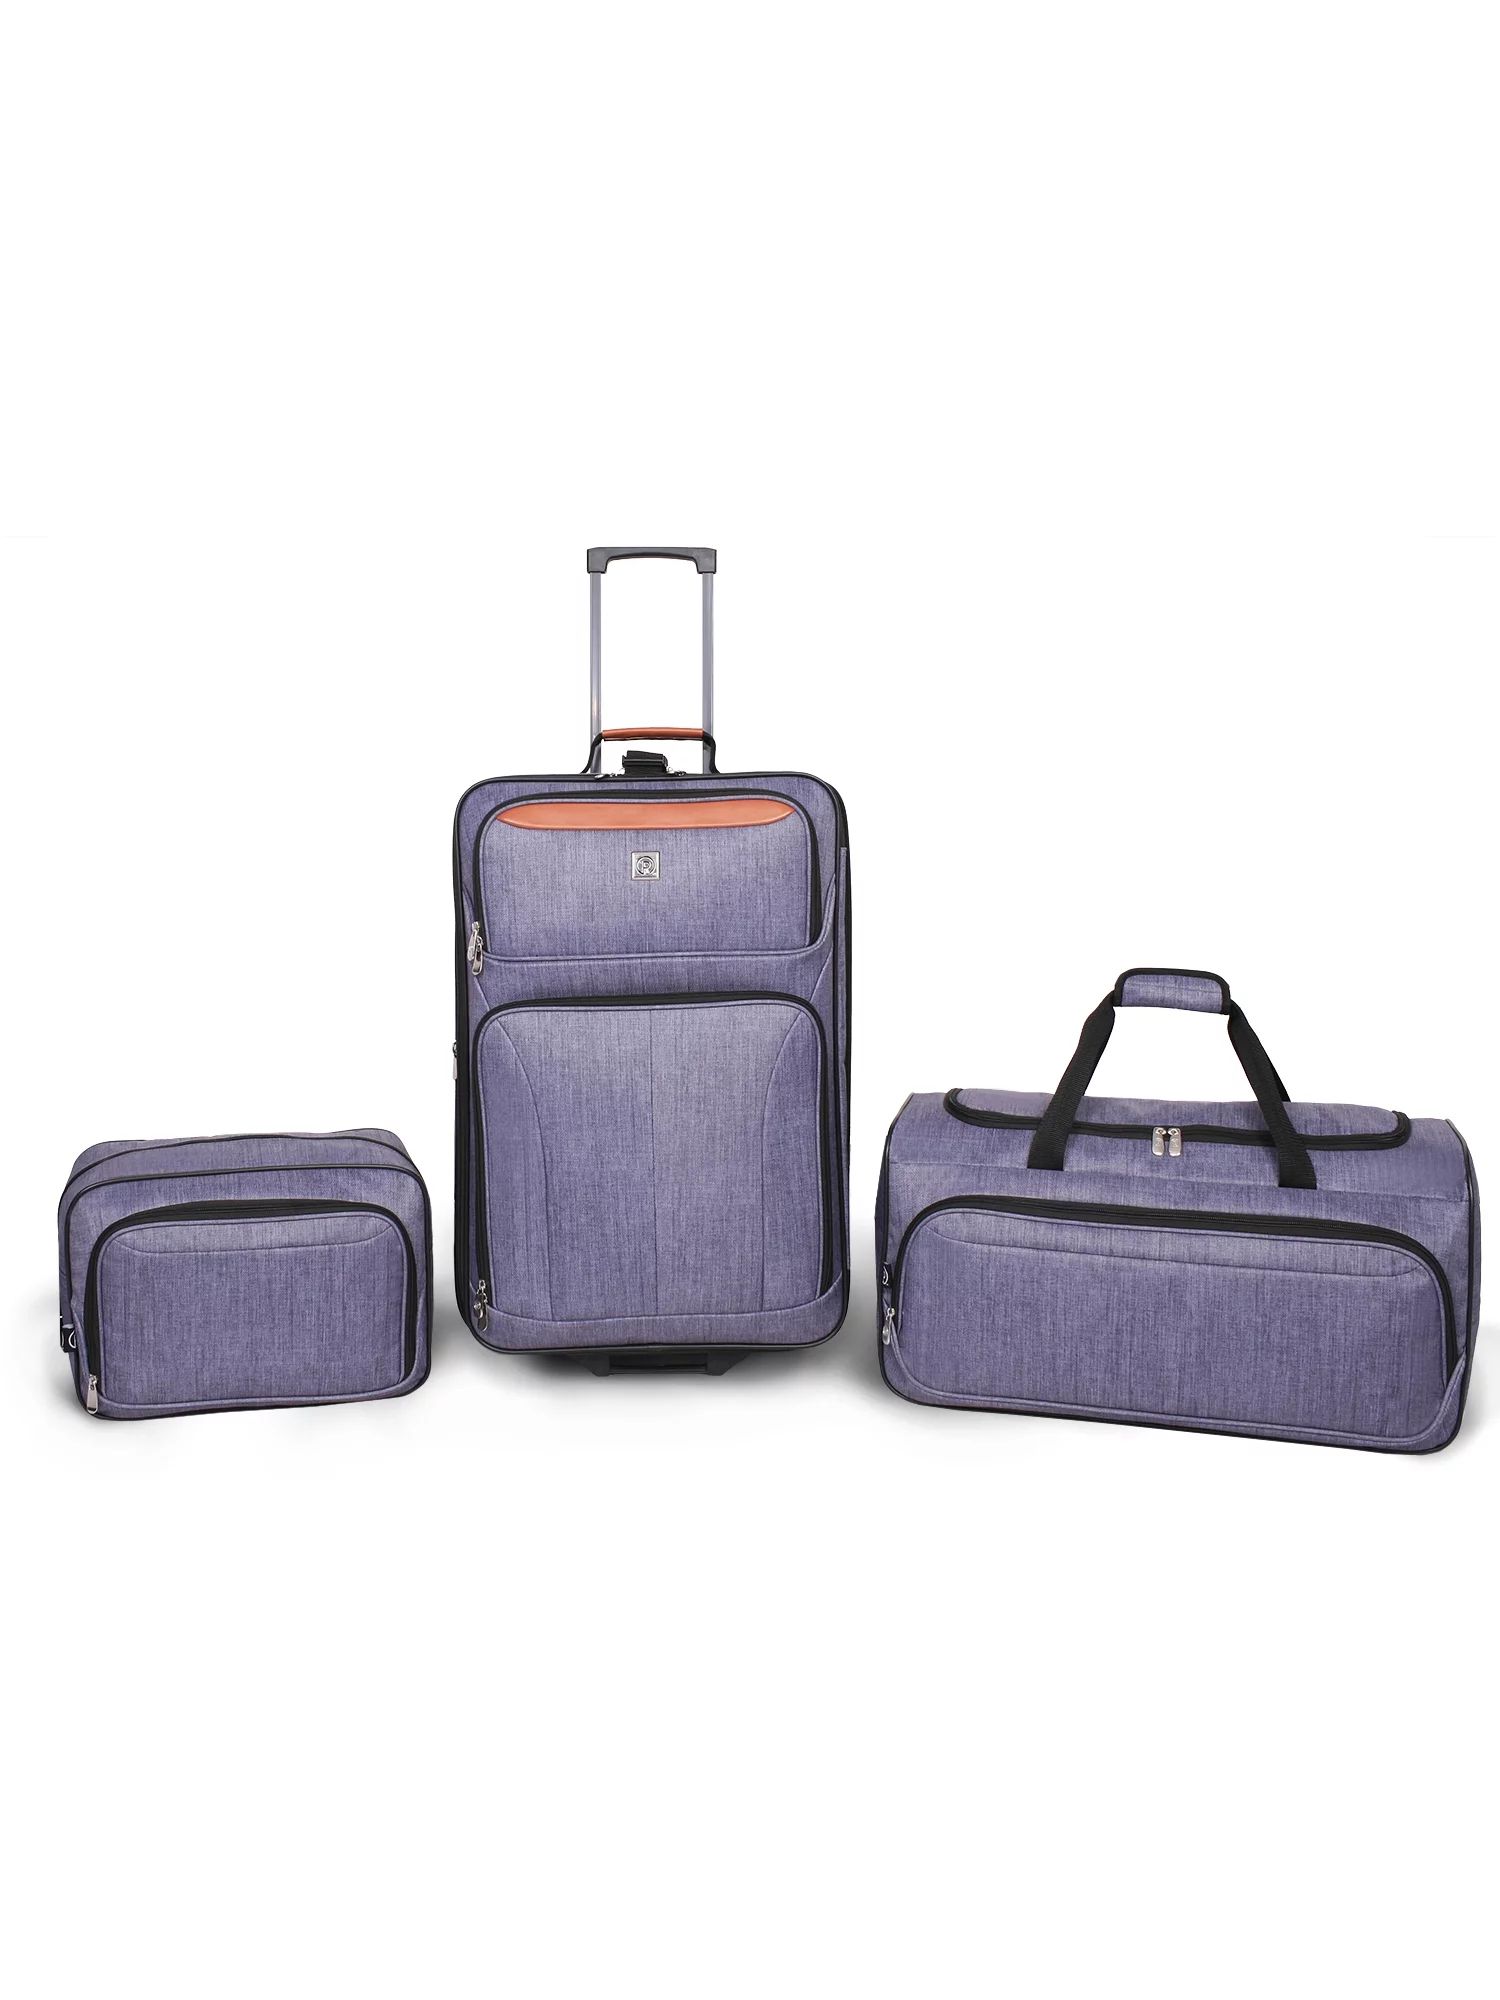 Protege Gray 3pc Travel Luggage Set 24" Check Bag, 22" Duffel, & Boarding Tote | Walmart (US)